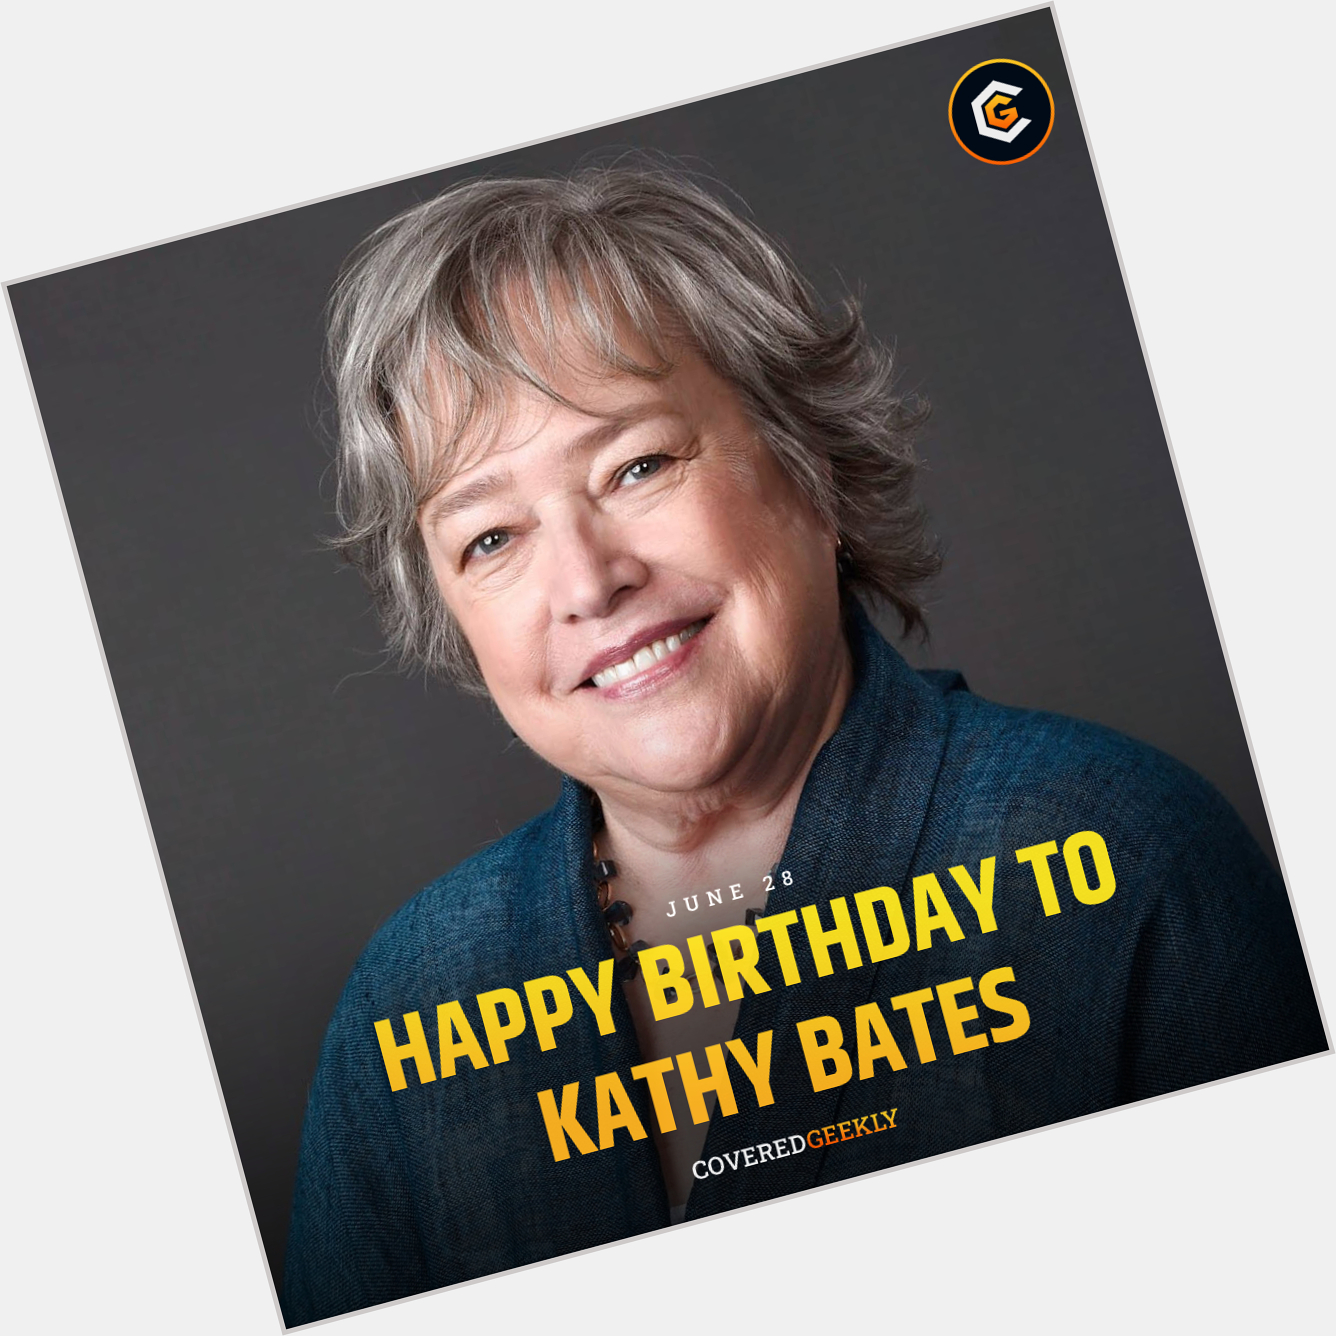 Happy birthday to The legendary Kathy Bates, who turns 75 today. 